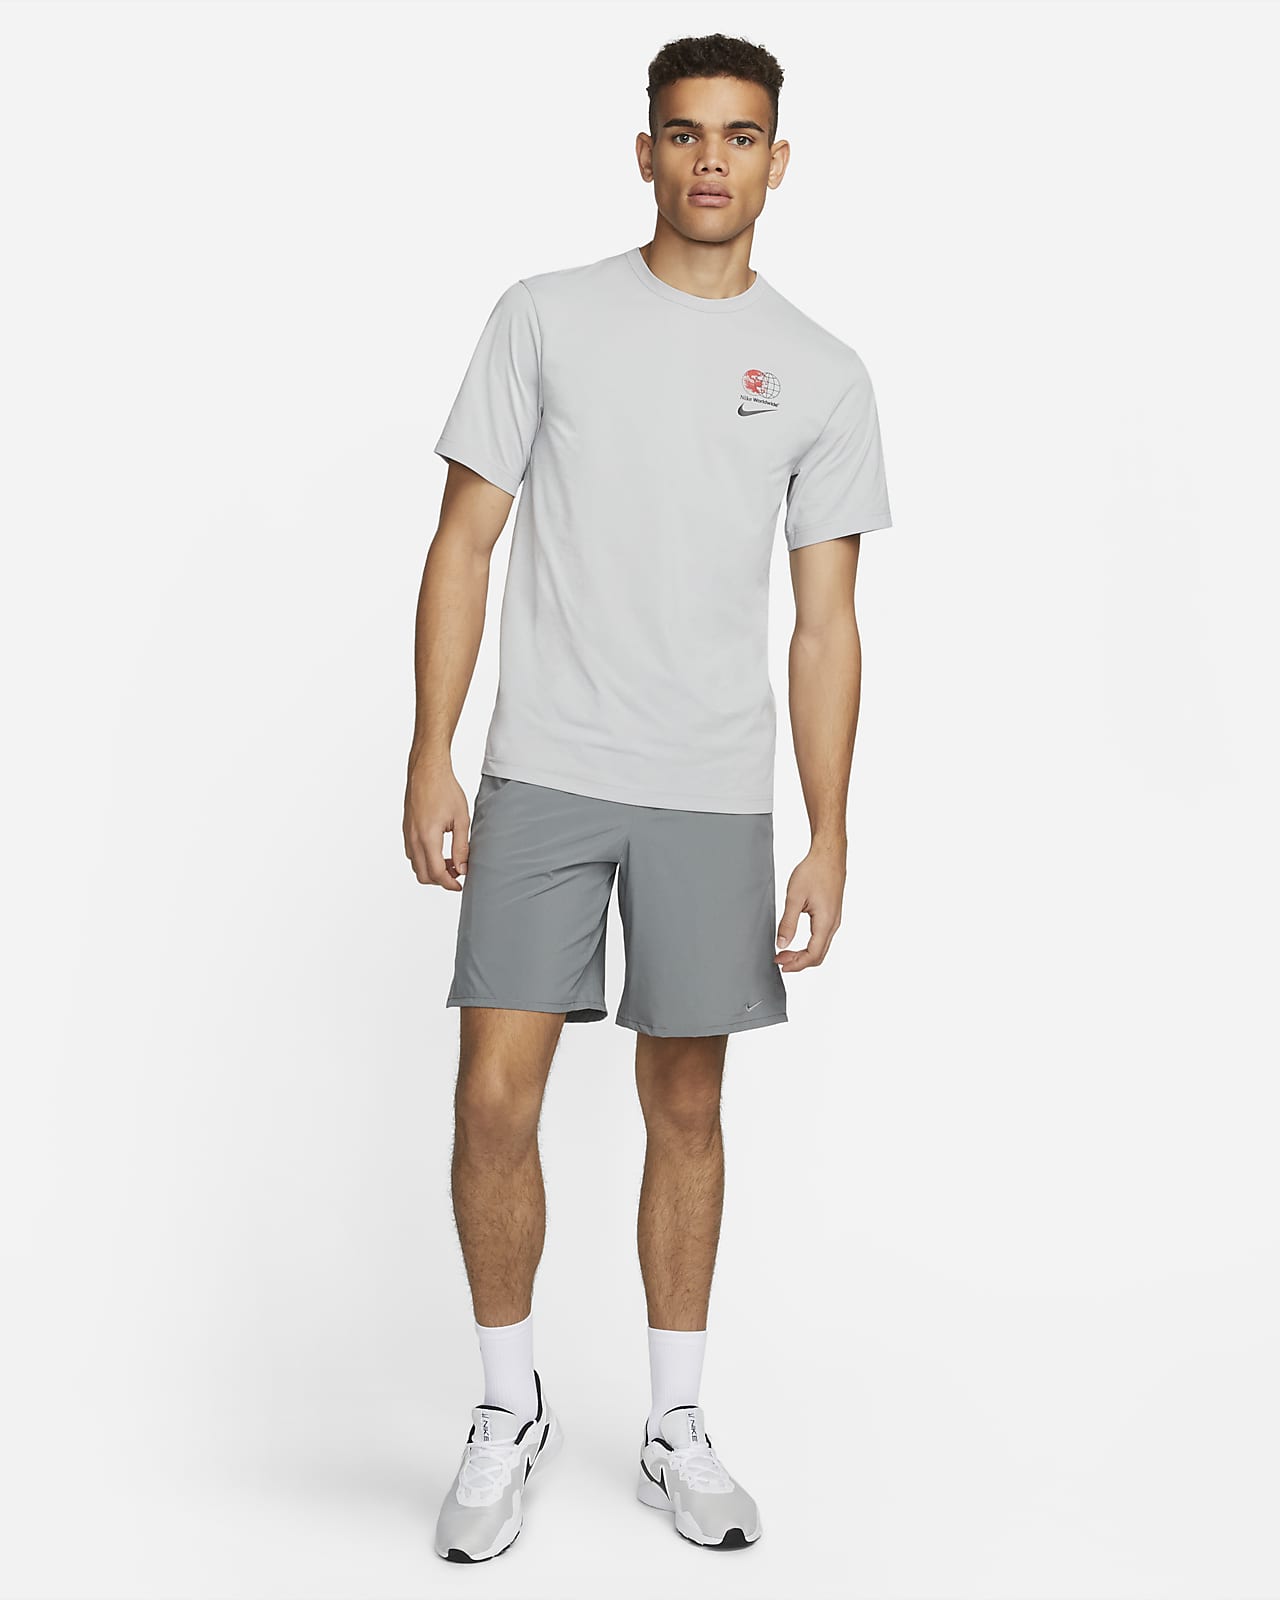 GB, Limitless 2-in-1 Shorts - Light Grey, Gym Shorts Men